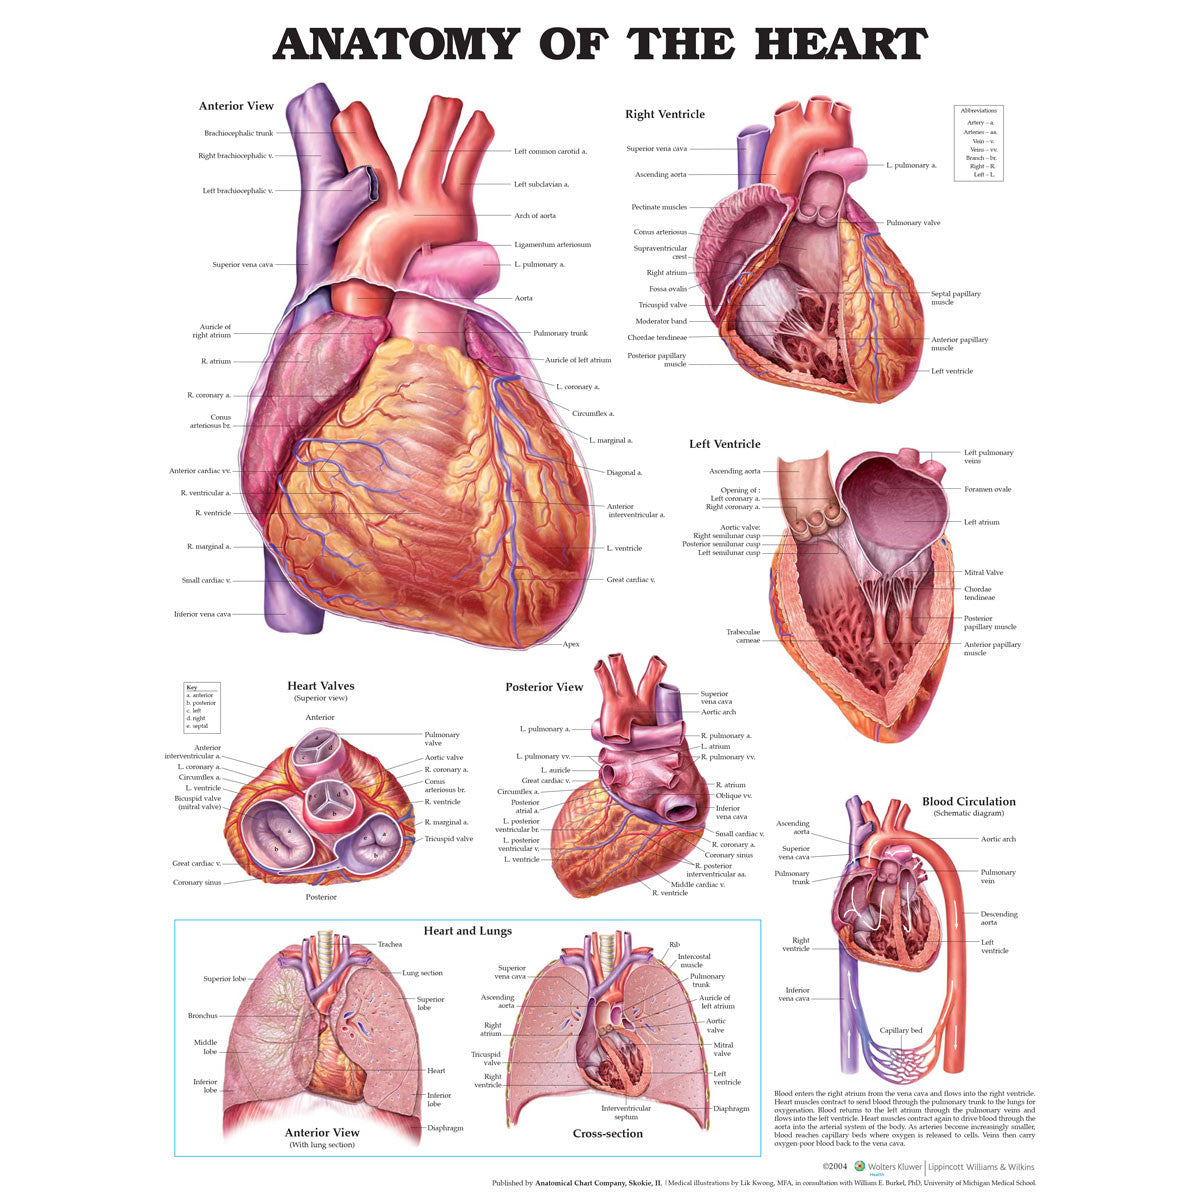 Anatomy of the Heart chart